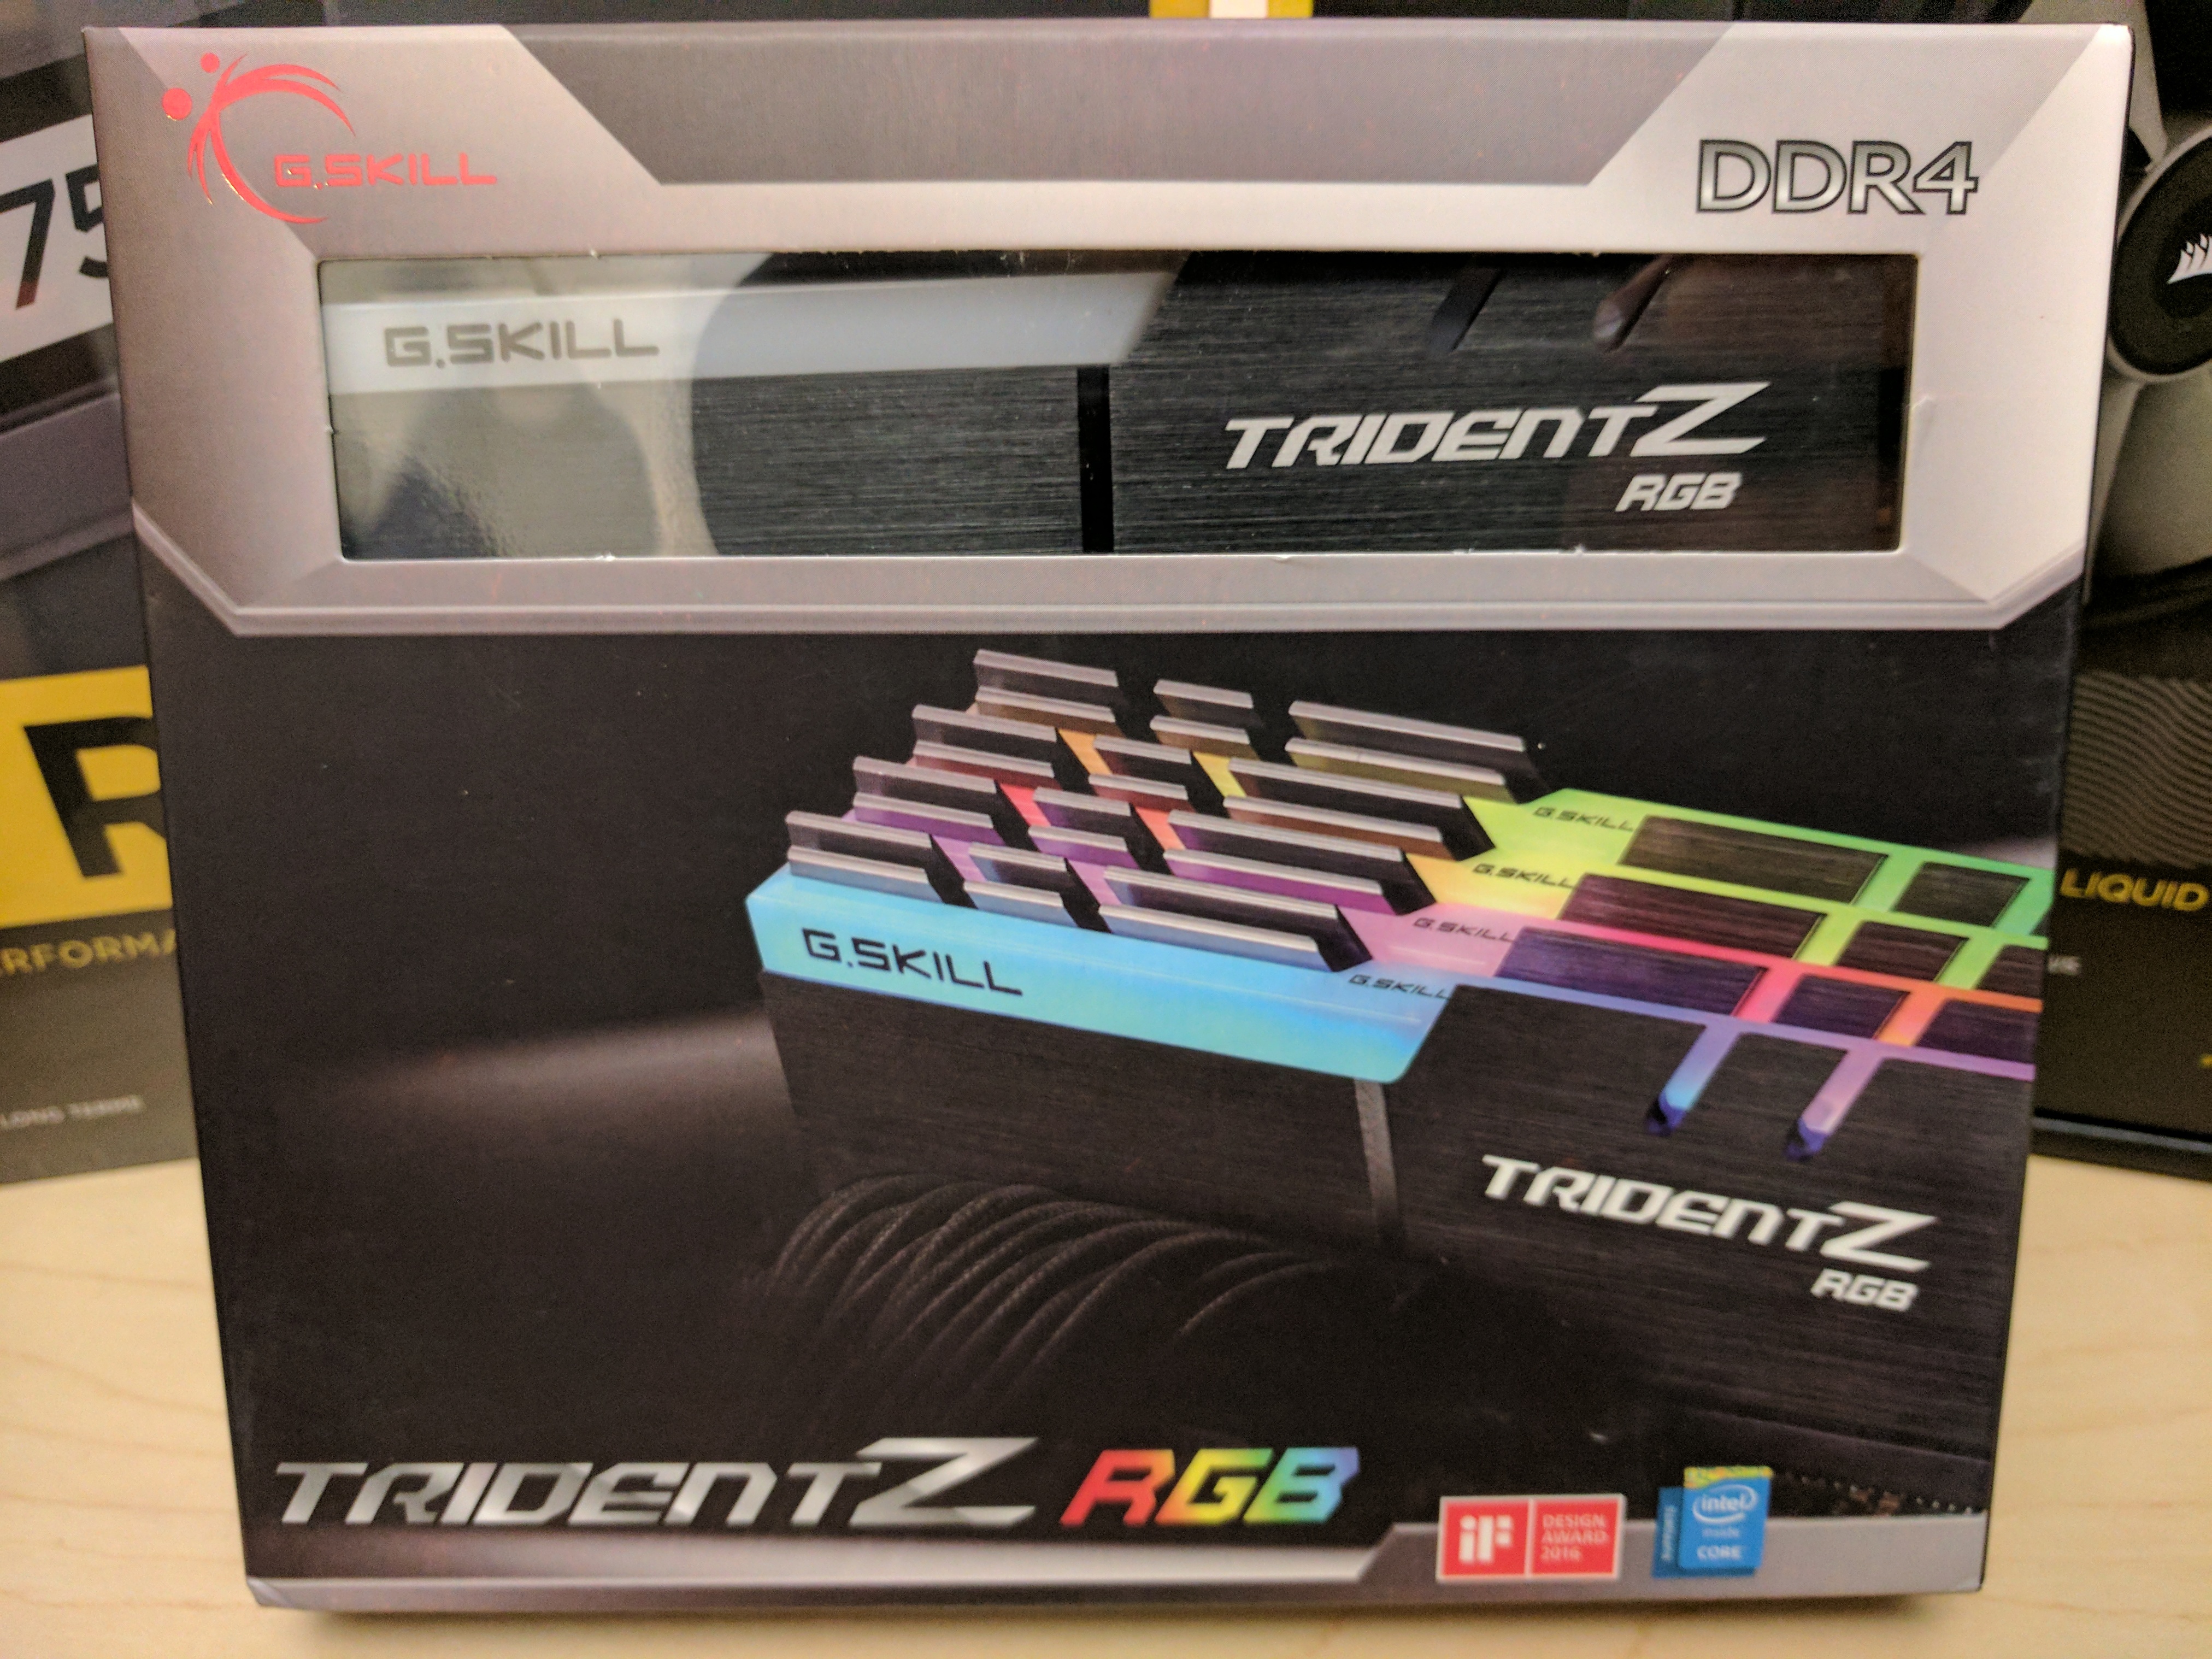 G.Skill Trident Z RGB RAM